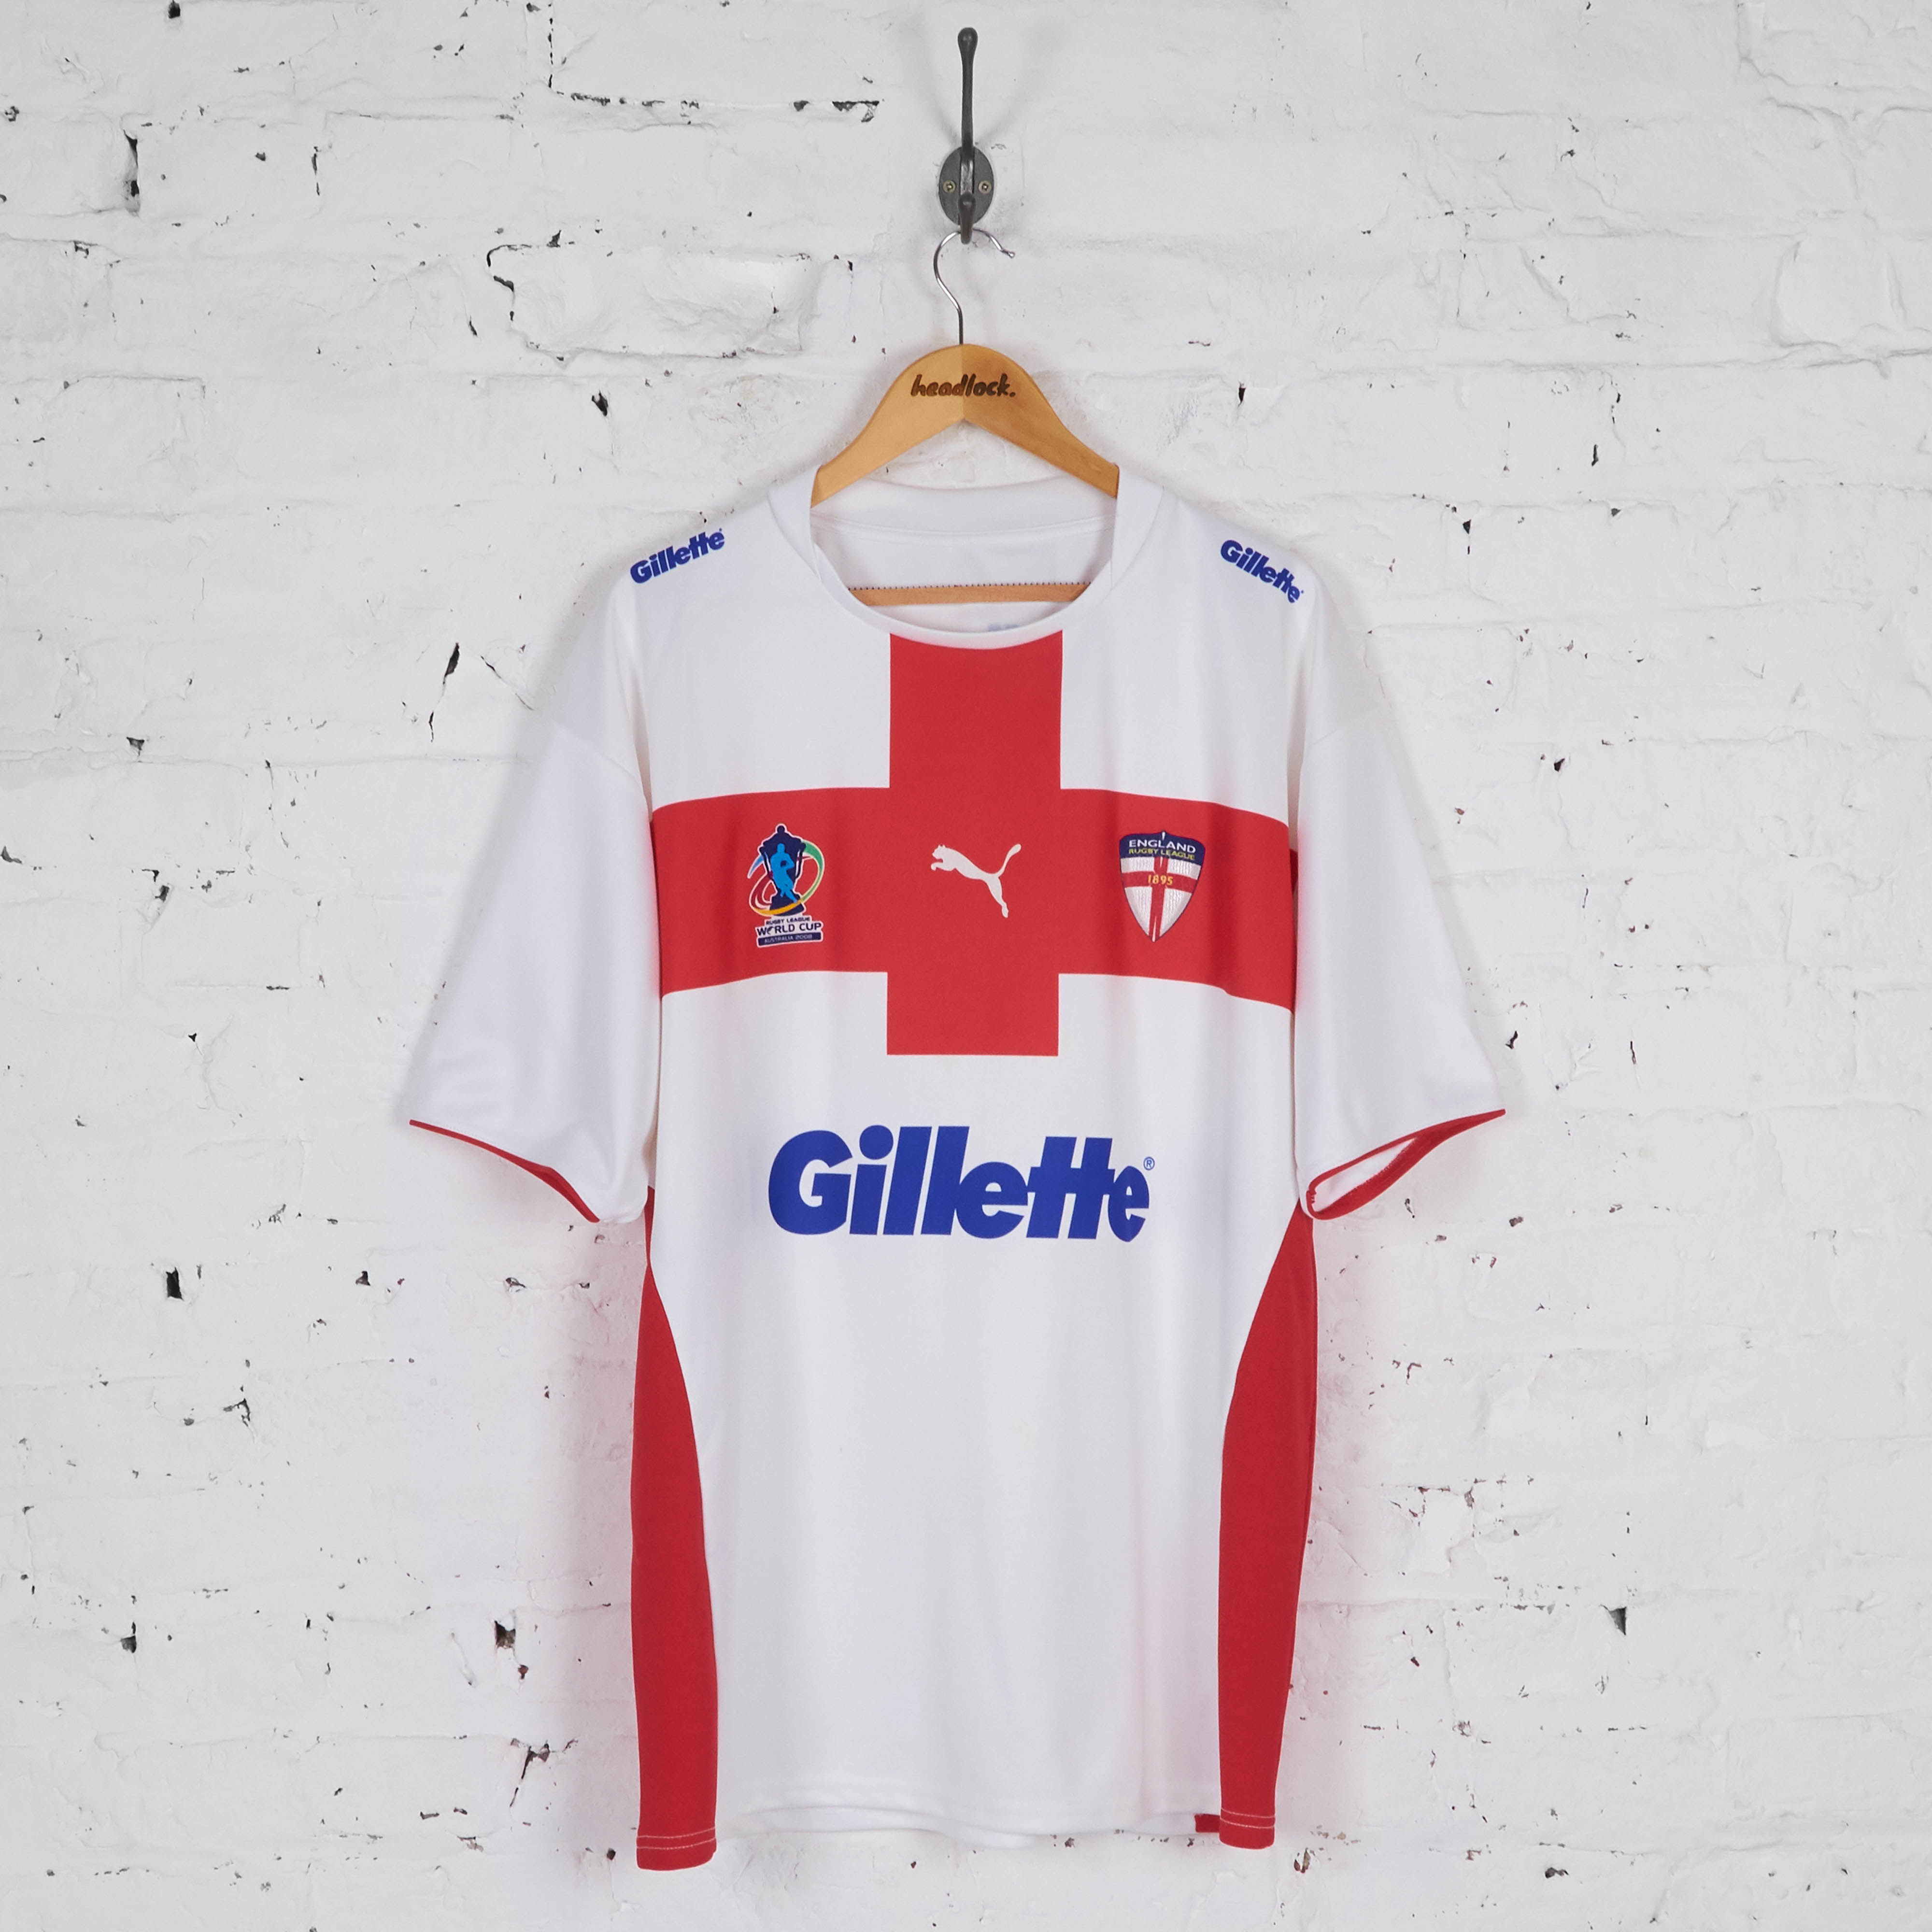 England Rugby League Shirt - White